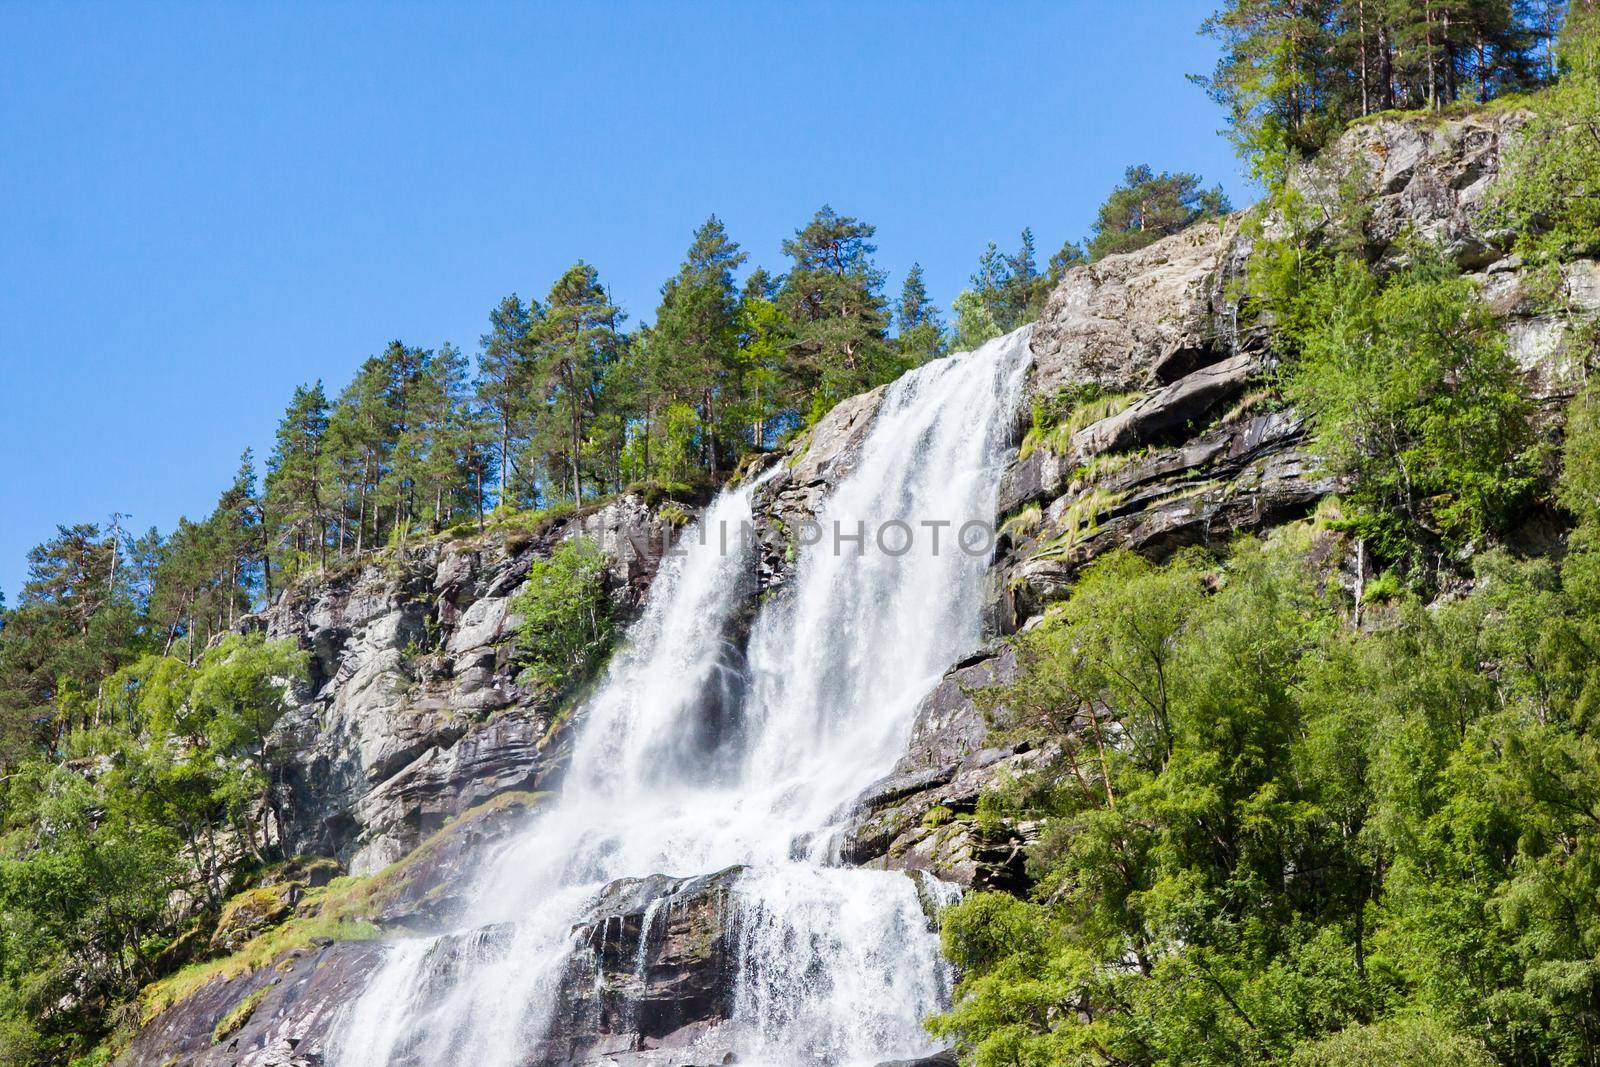 View of Tvindefossen or Tvinnefossen waterfall near Voss in Norway